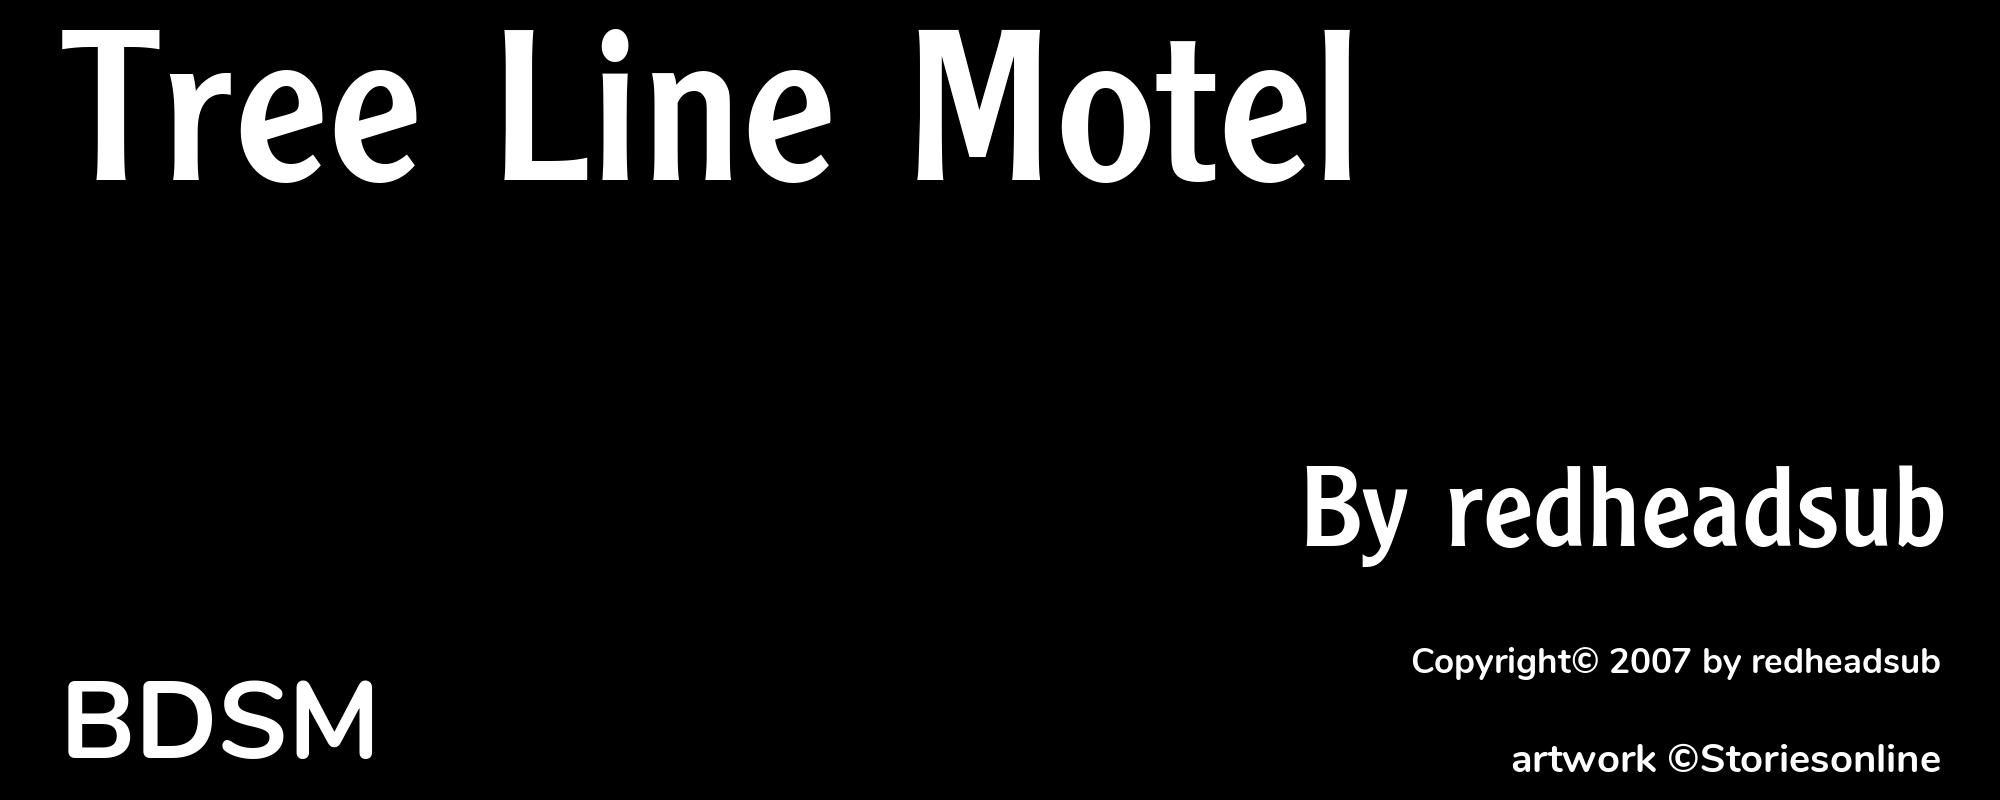 Tree Line Motel - Cover